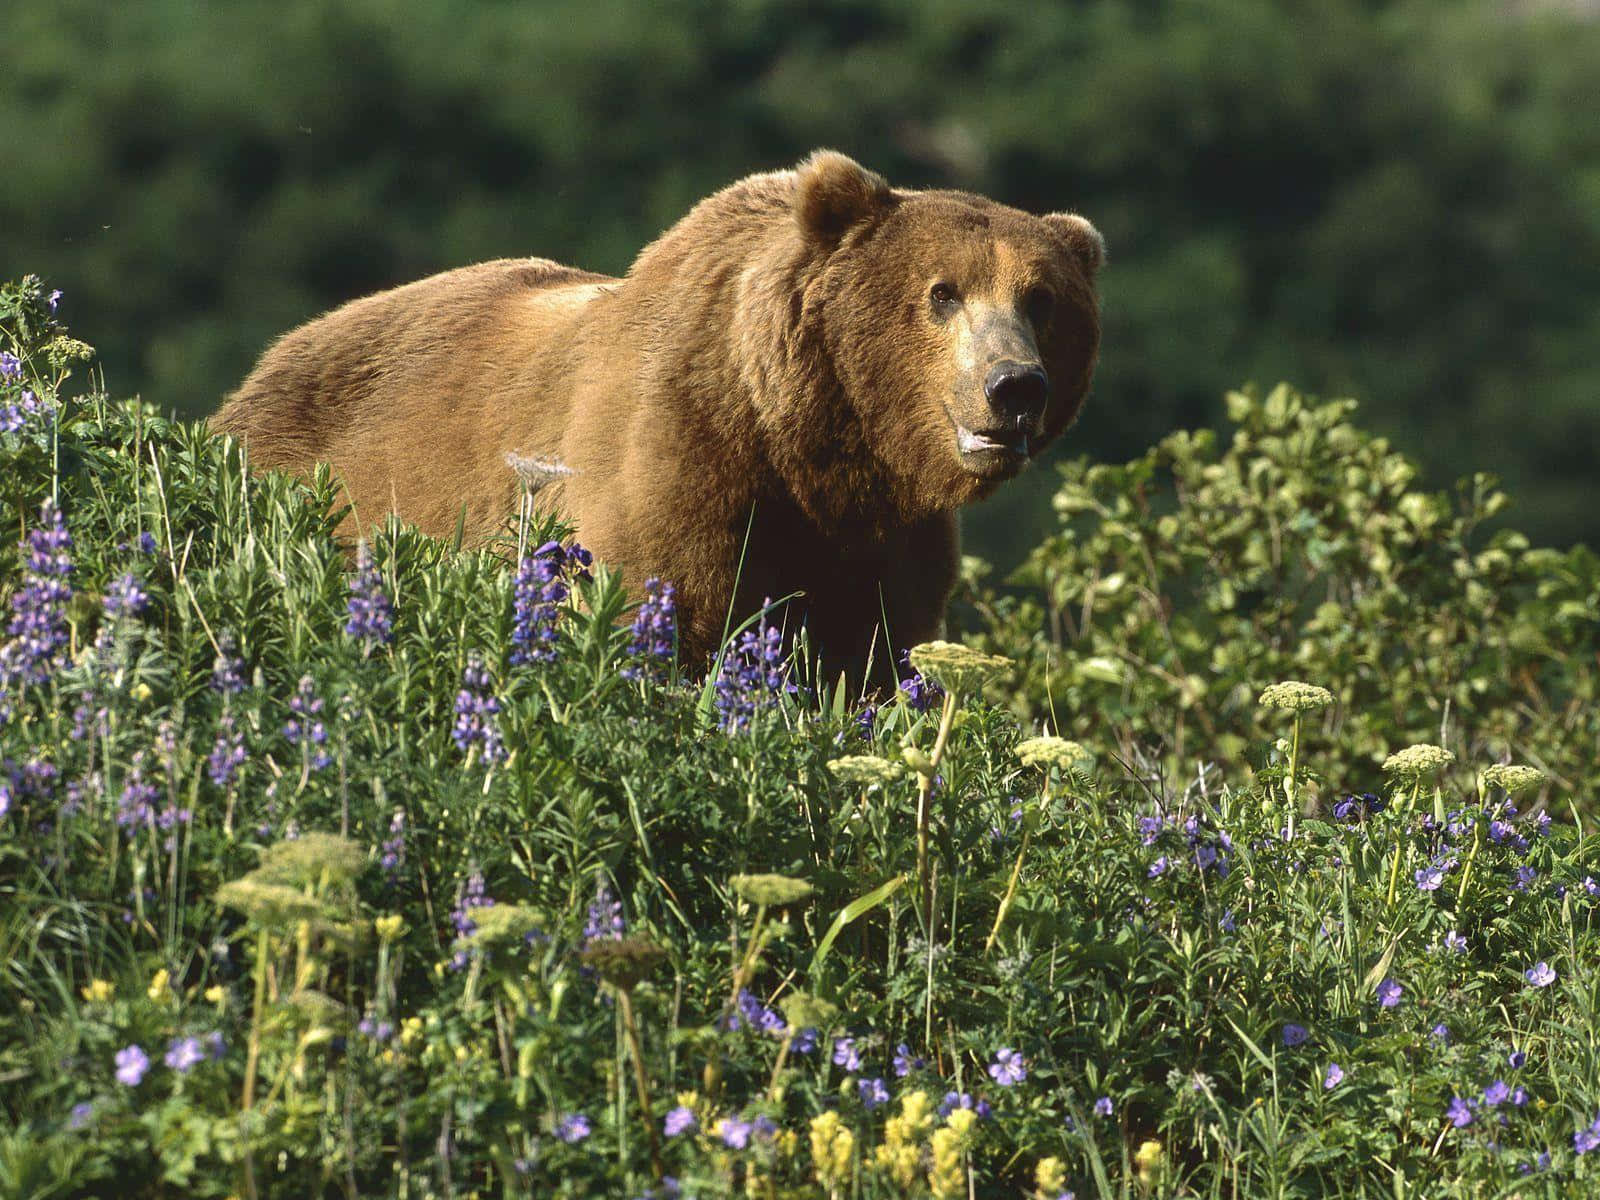 Image  Stunning Big Bear, Standing Regally Amongst a Scenic Backdrop